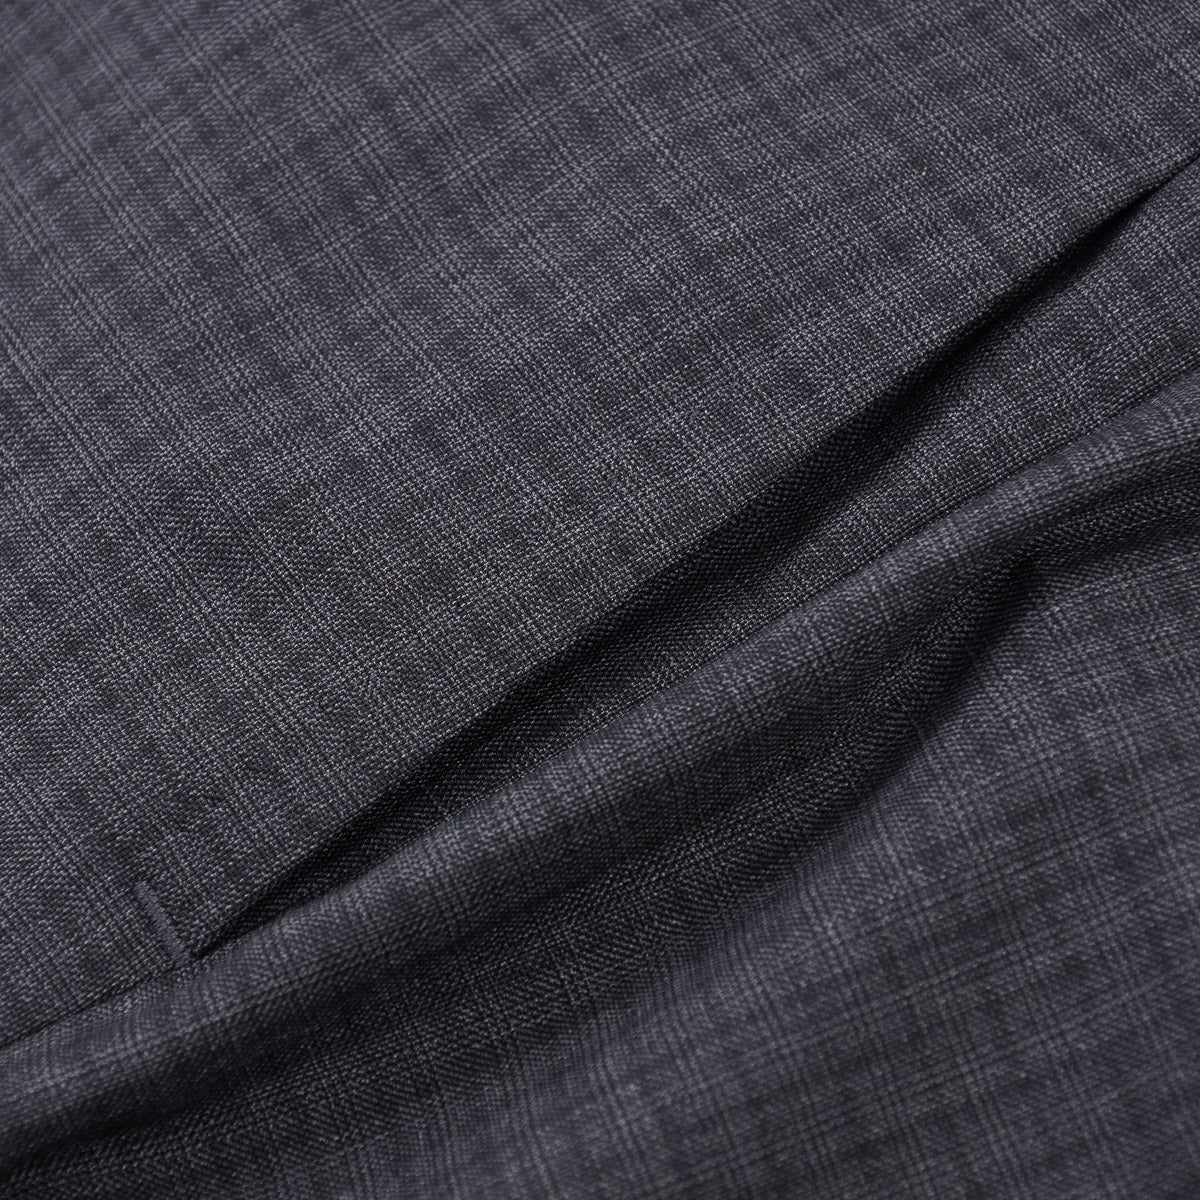 Sartorio Super 160s Wool Suit - Top Shelf Apparel